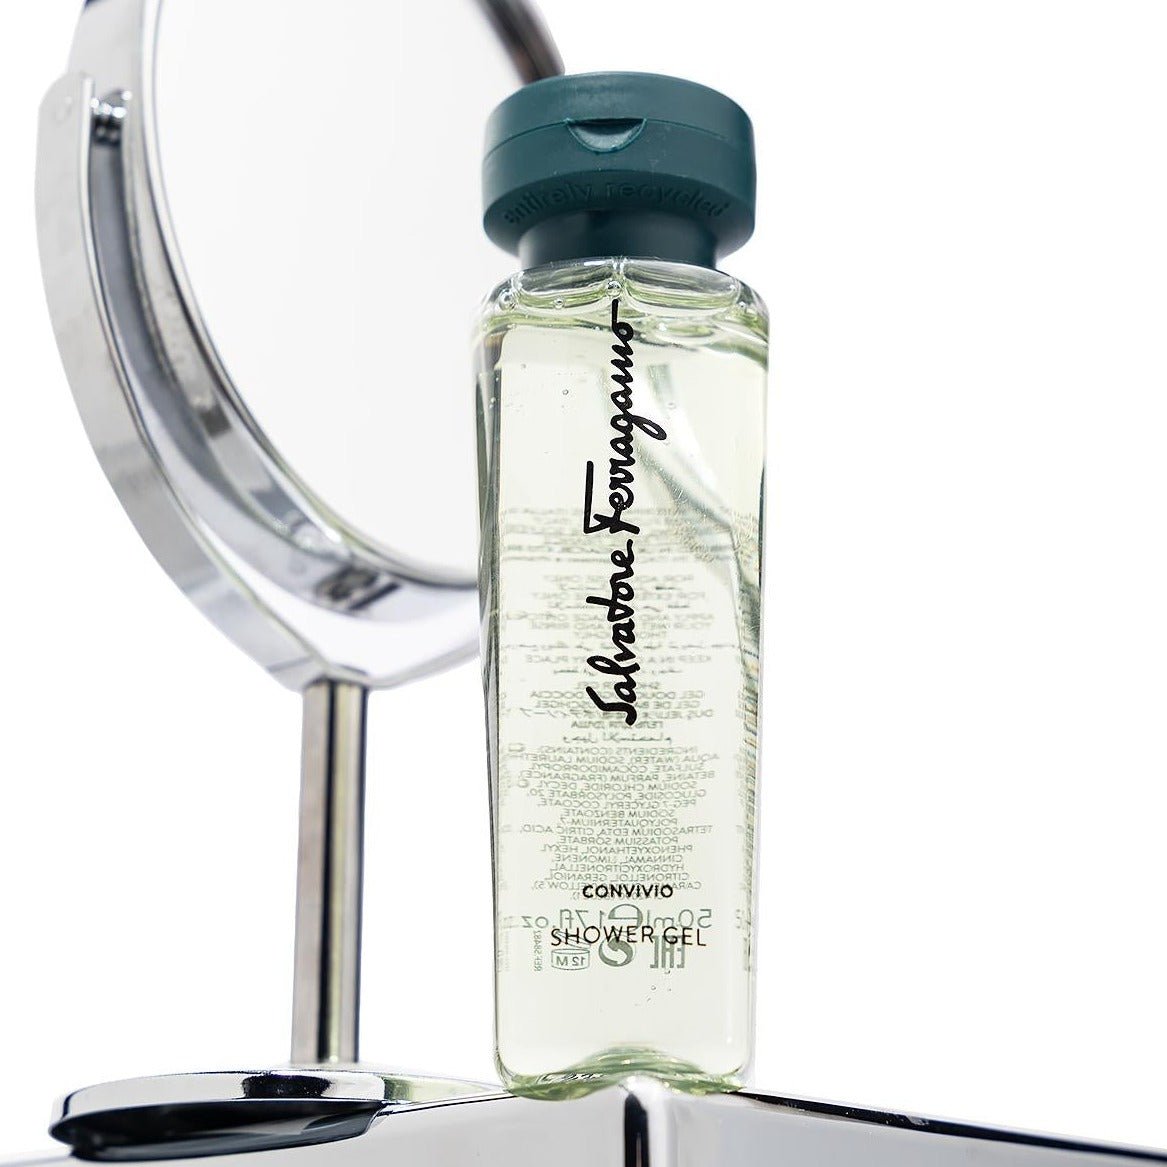 Salvatore Ferragamo Convivio Shower Gel | My Perfume Shop Australia